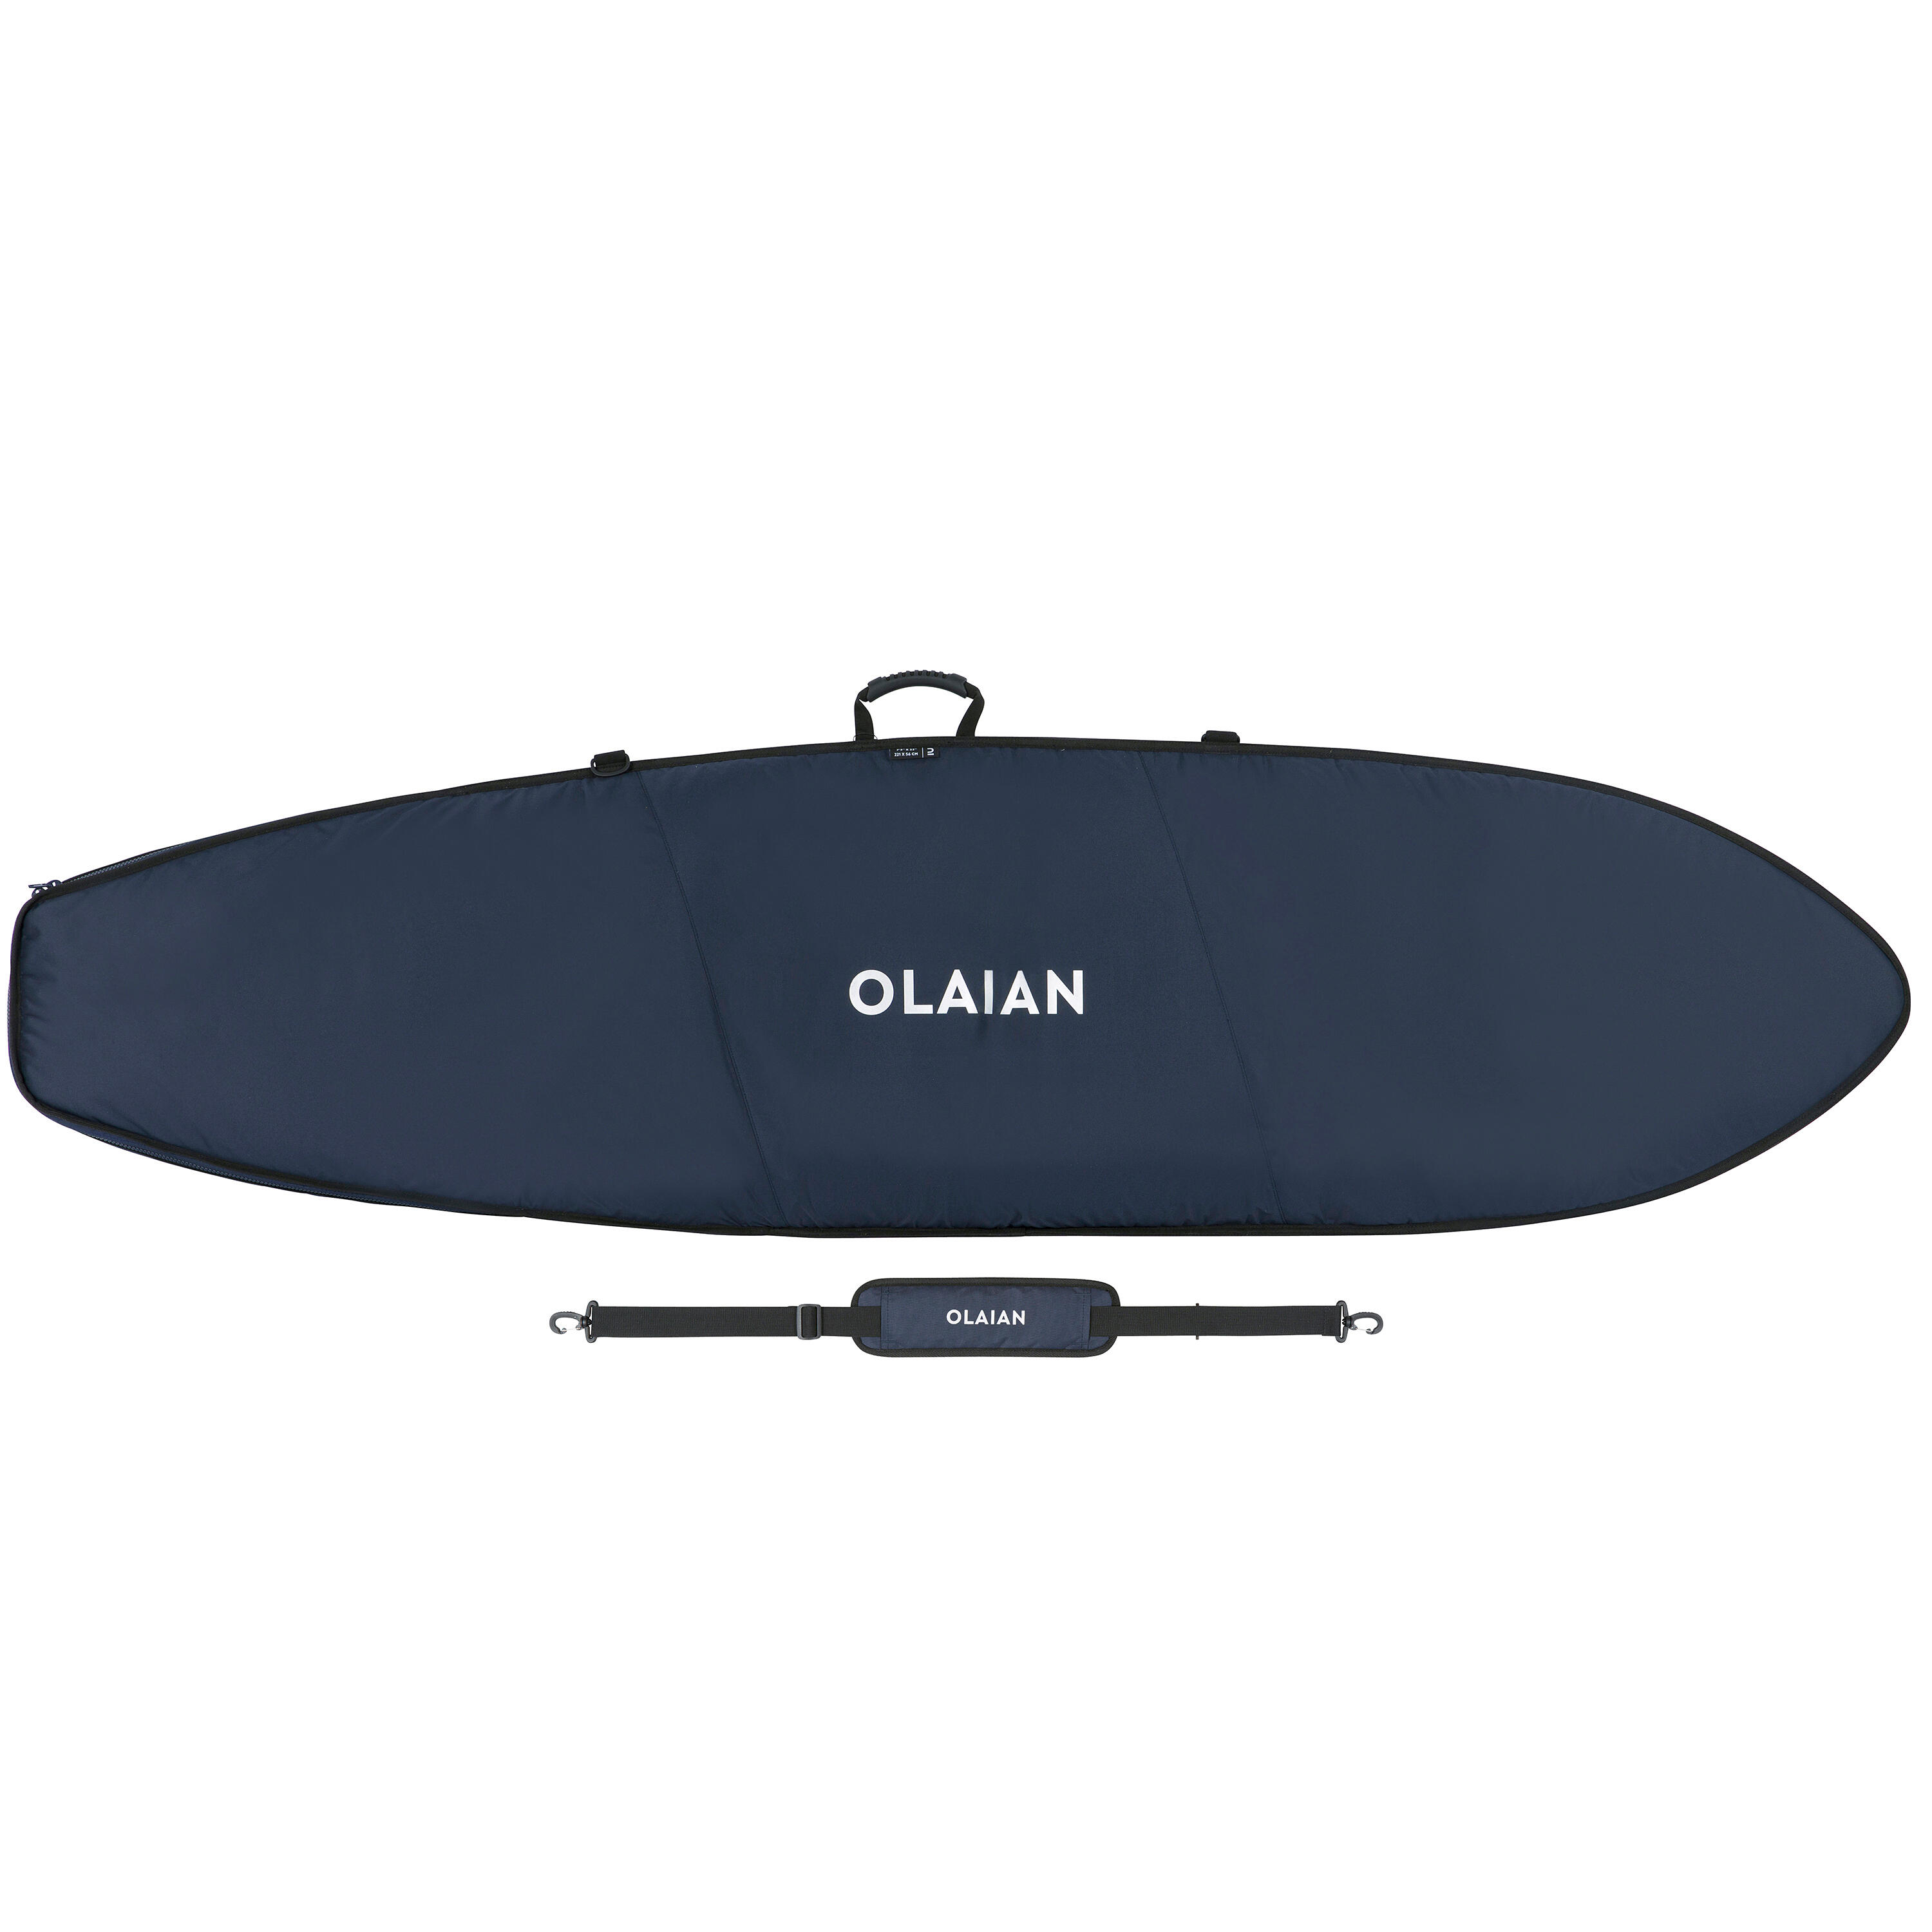 OLAIAN Boardbag Surfboard 900 7'3